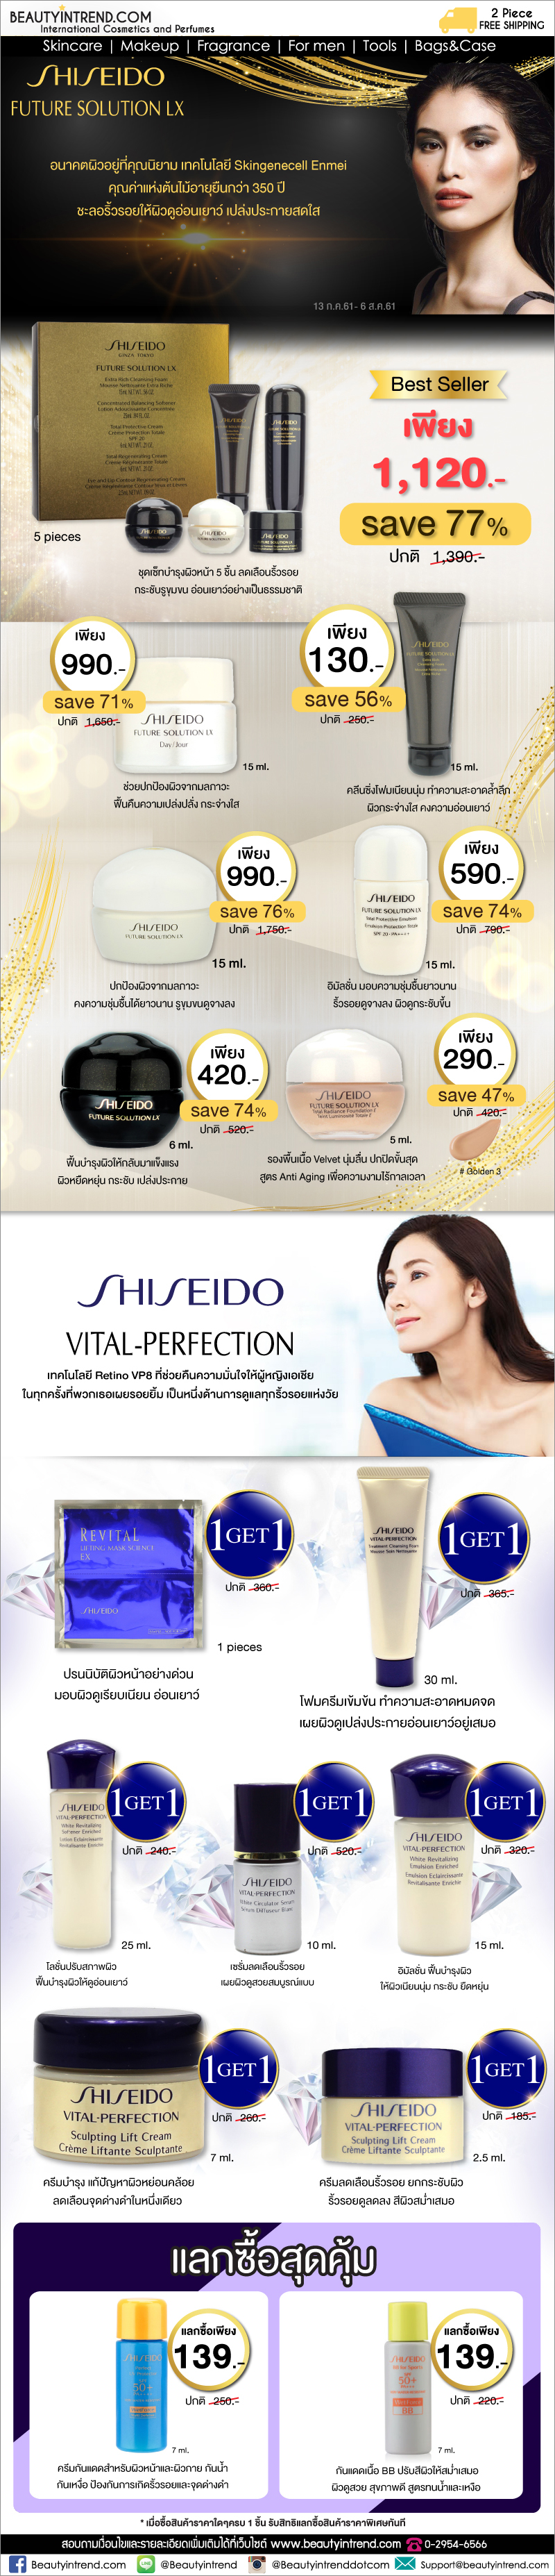 shiseido6-2.jpg